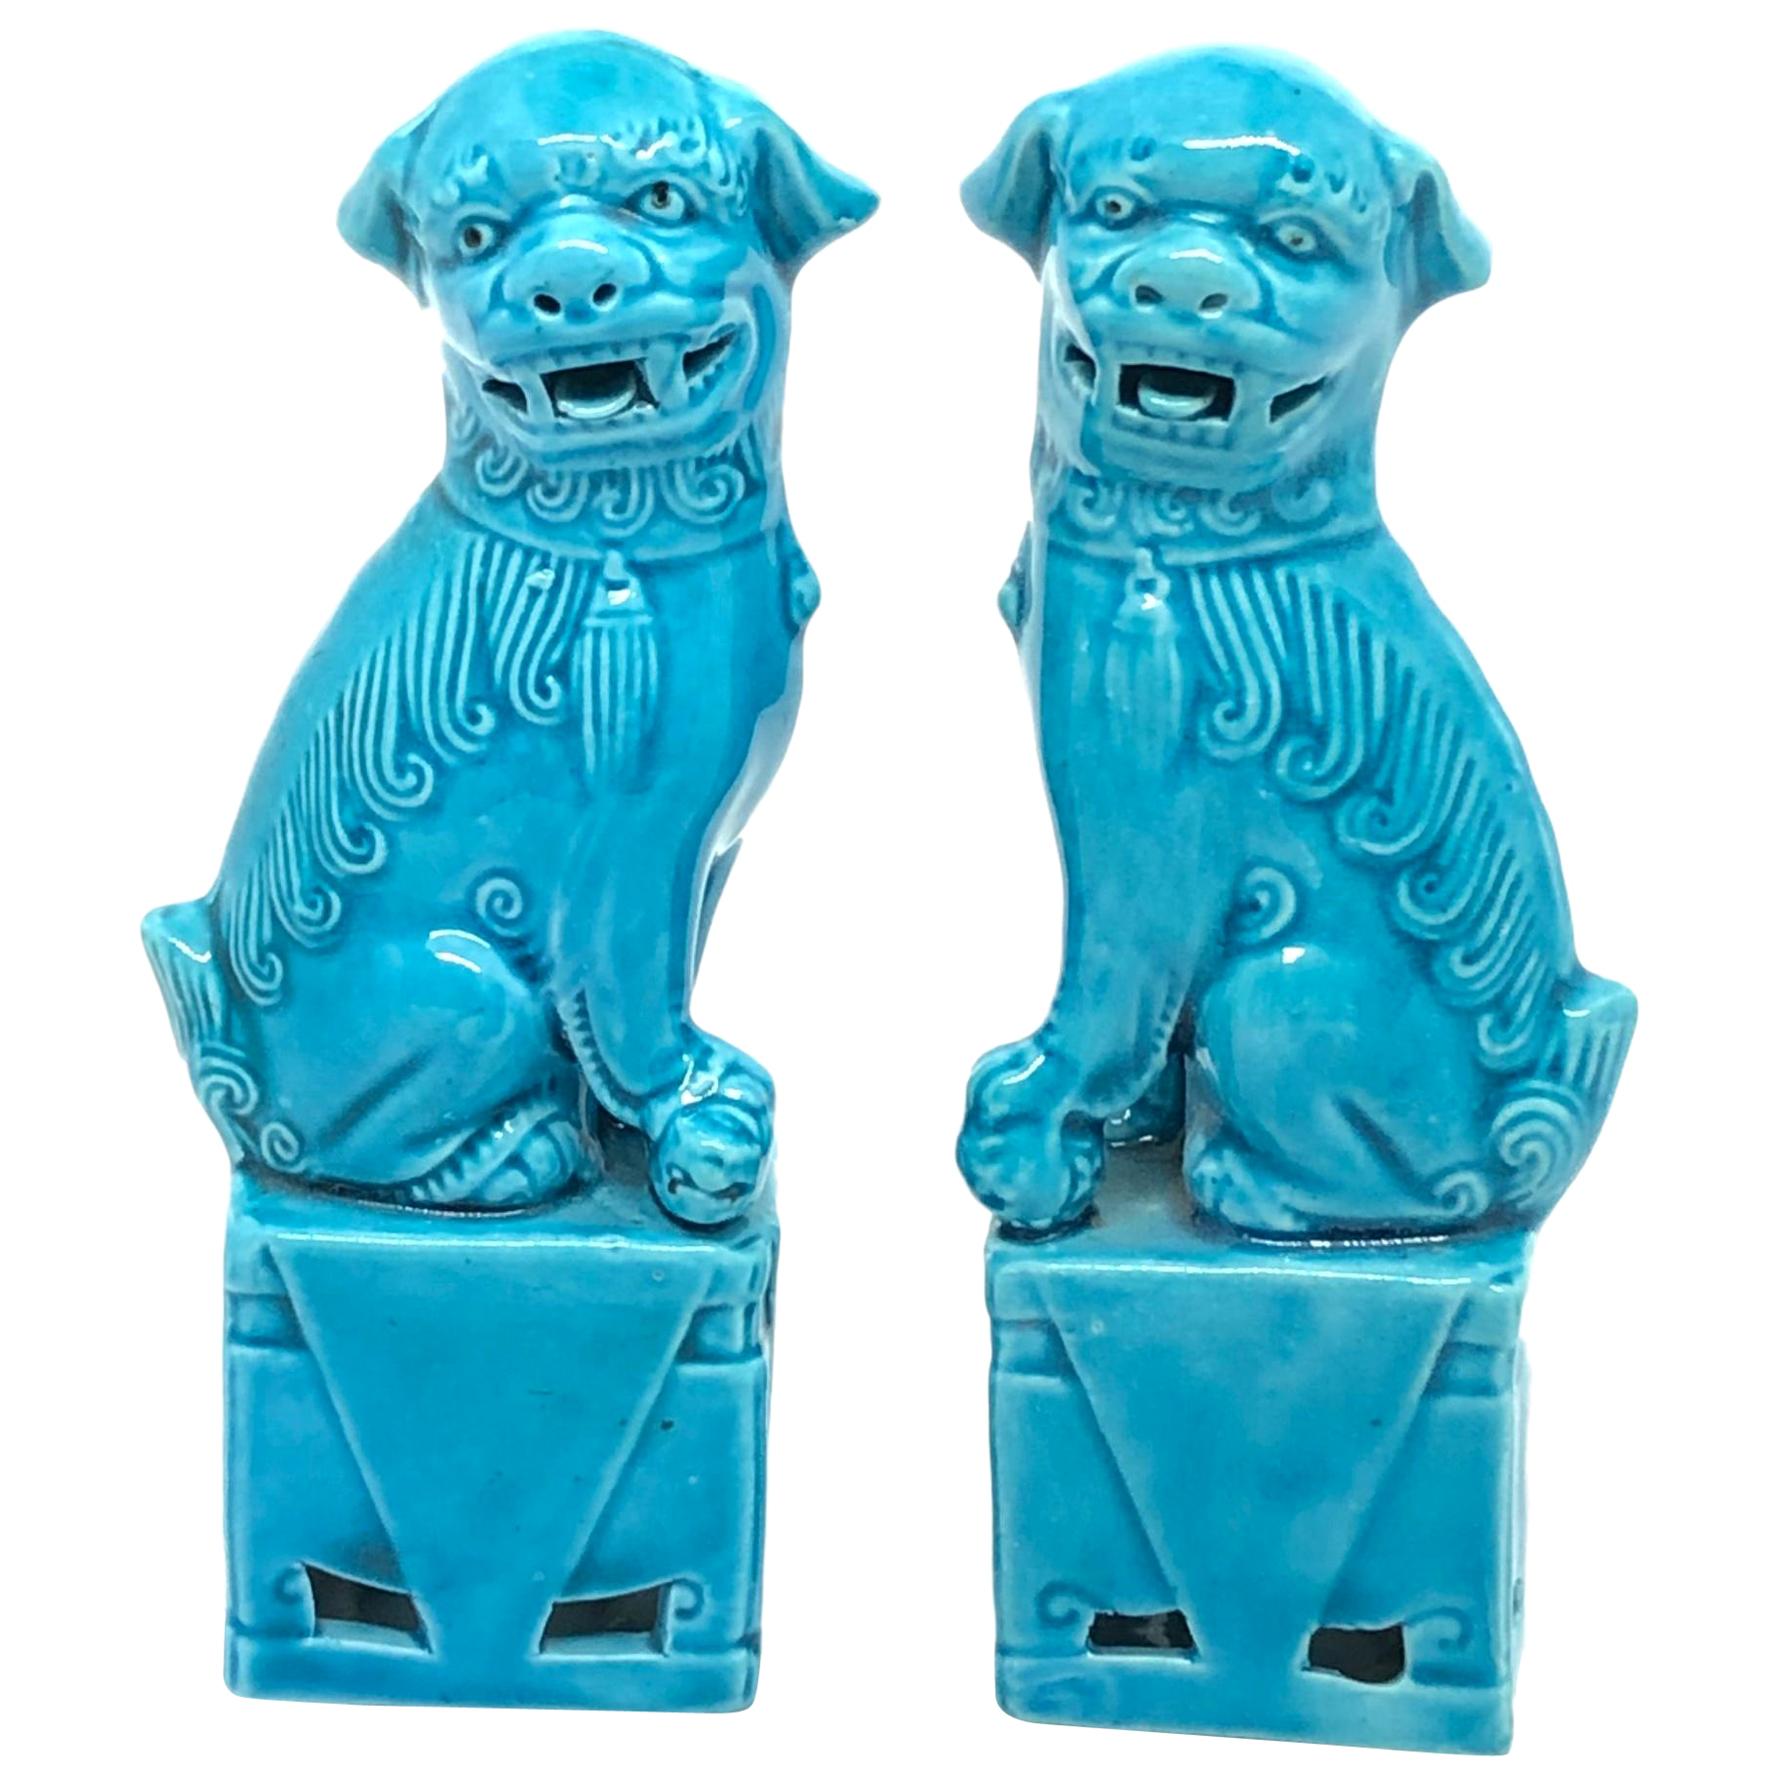 Pair of Decorative Turquoise Blue Mini Foo Dogs Sculptures